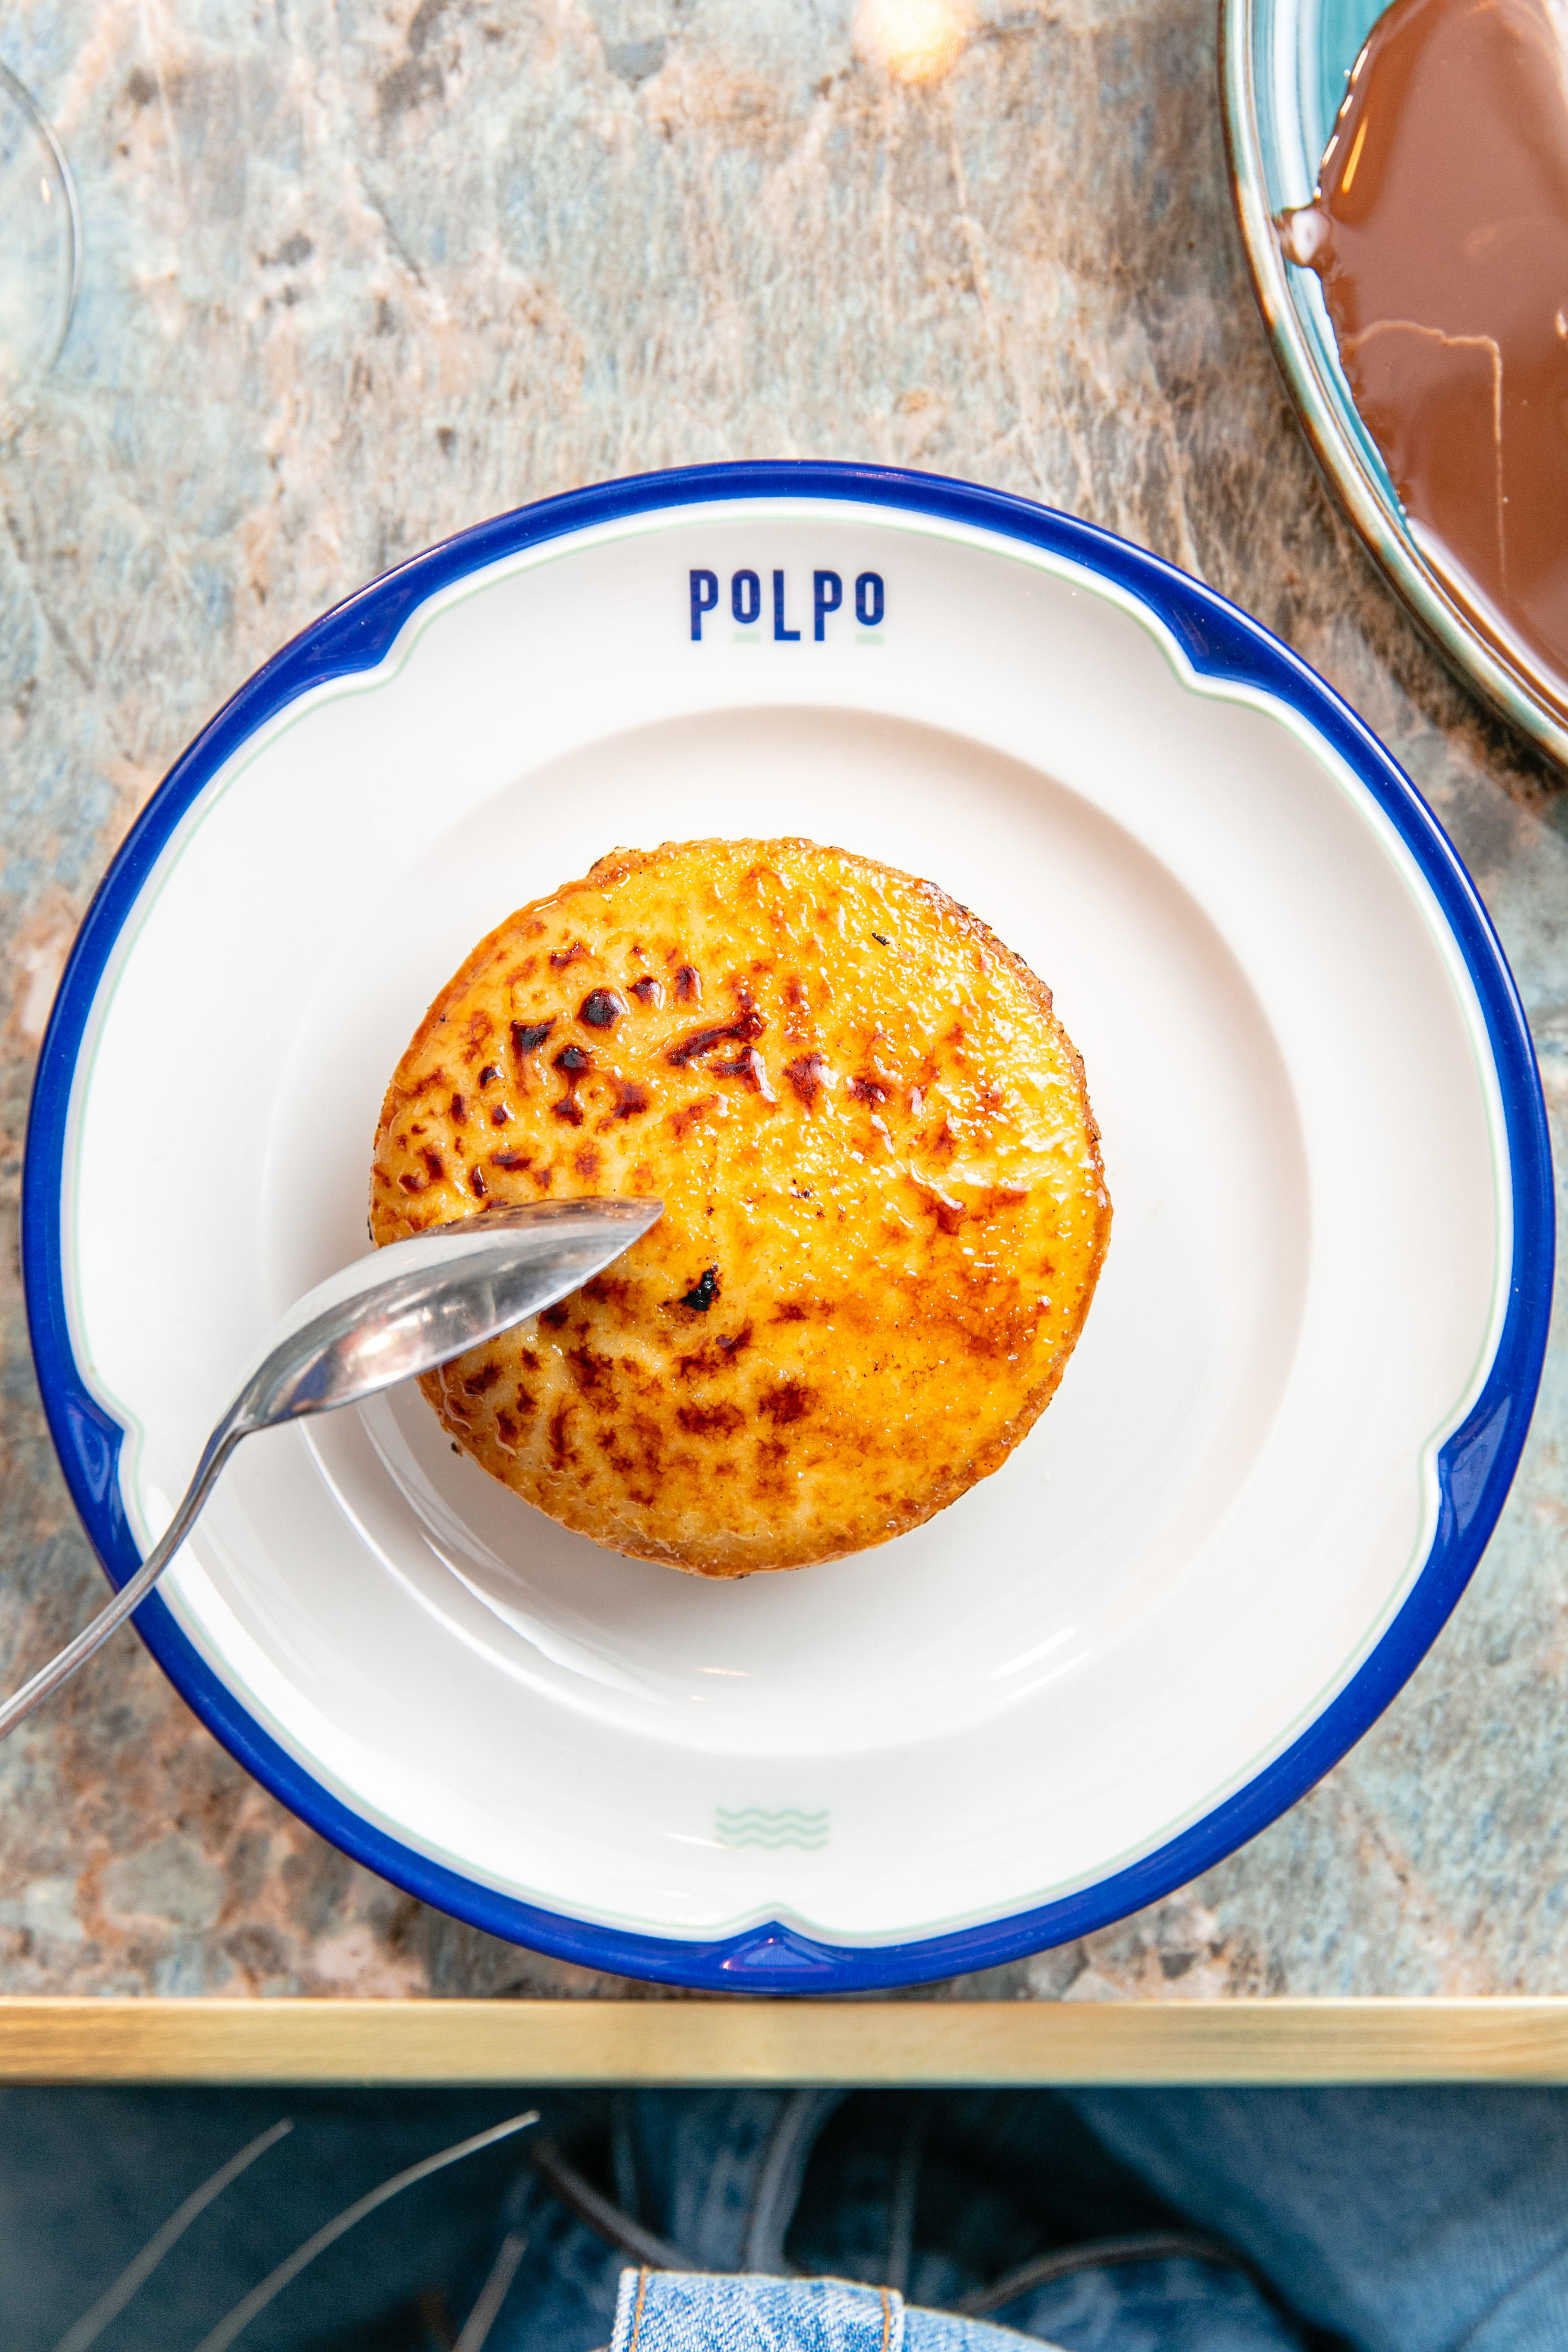 Images Polpo Brasserie